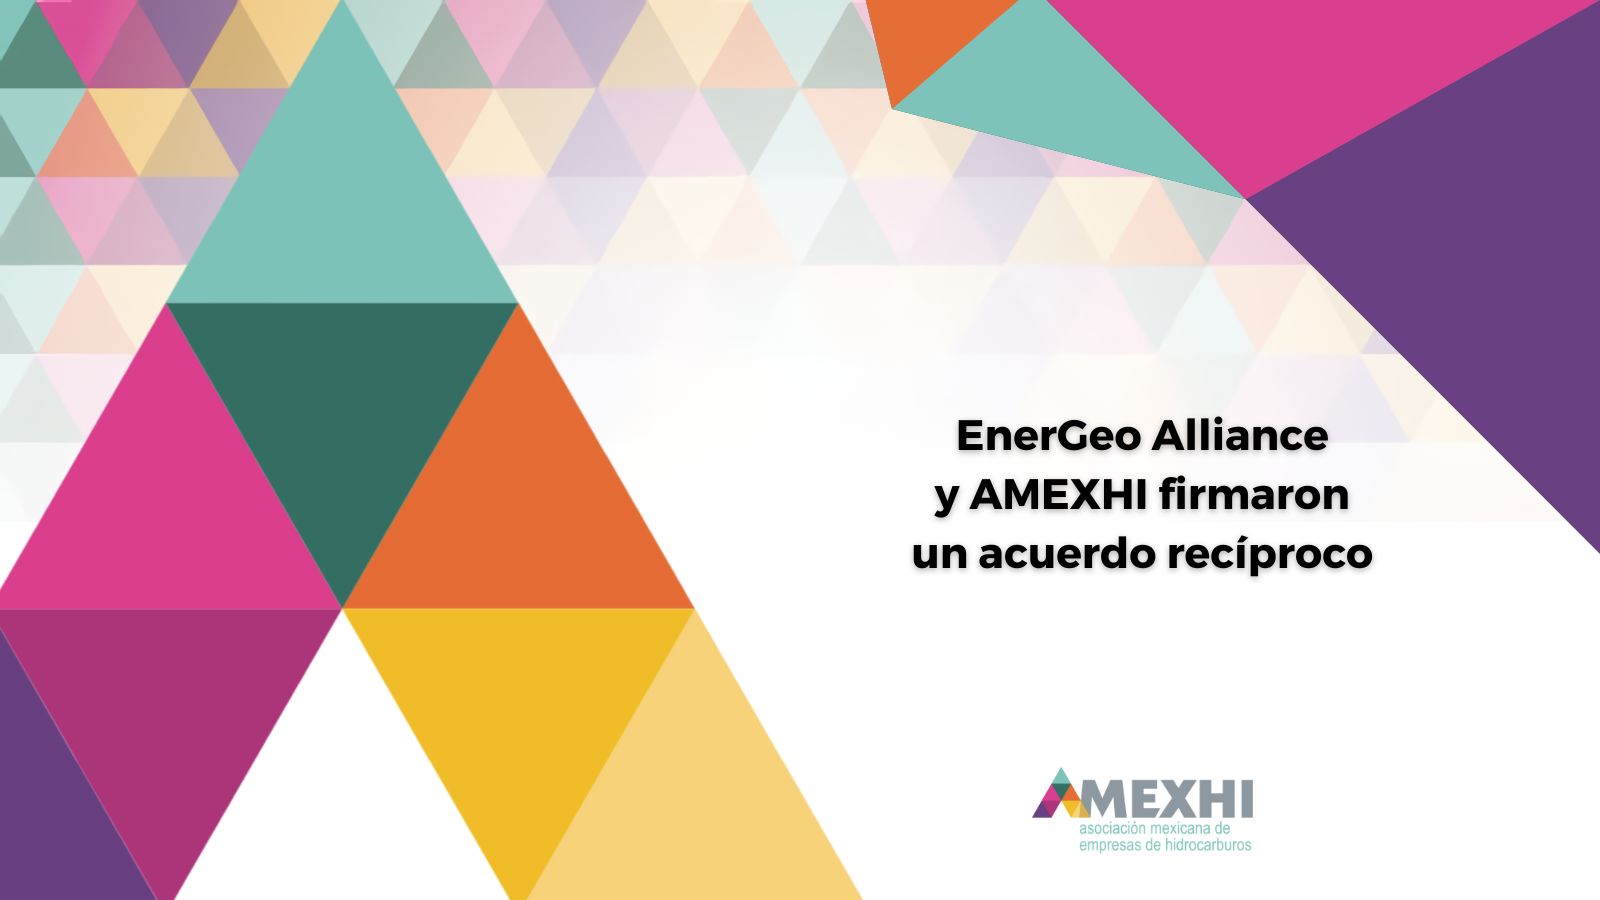 EnerGeo Alliance y AMEXHI firmaron un acuerdo recíproco